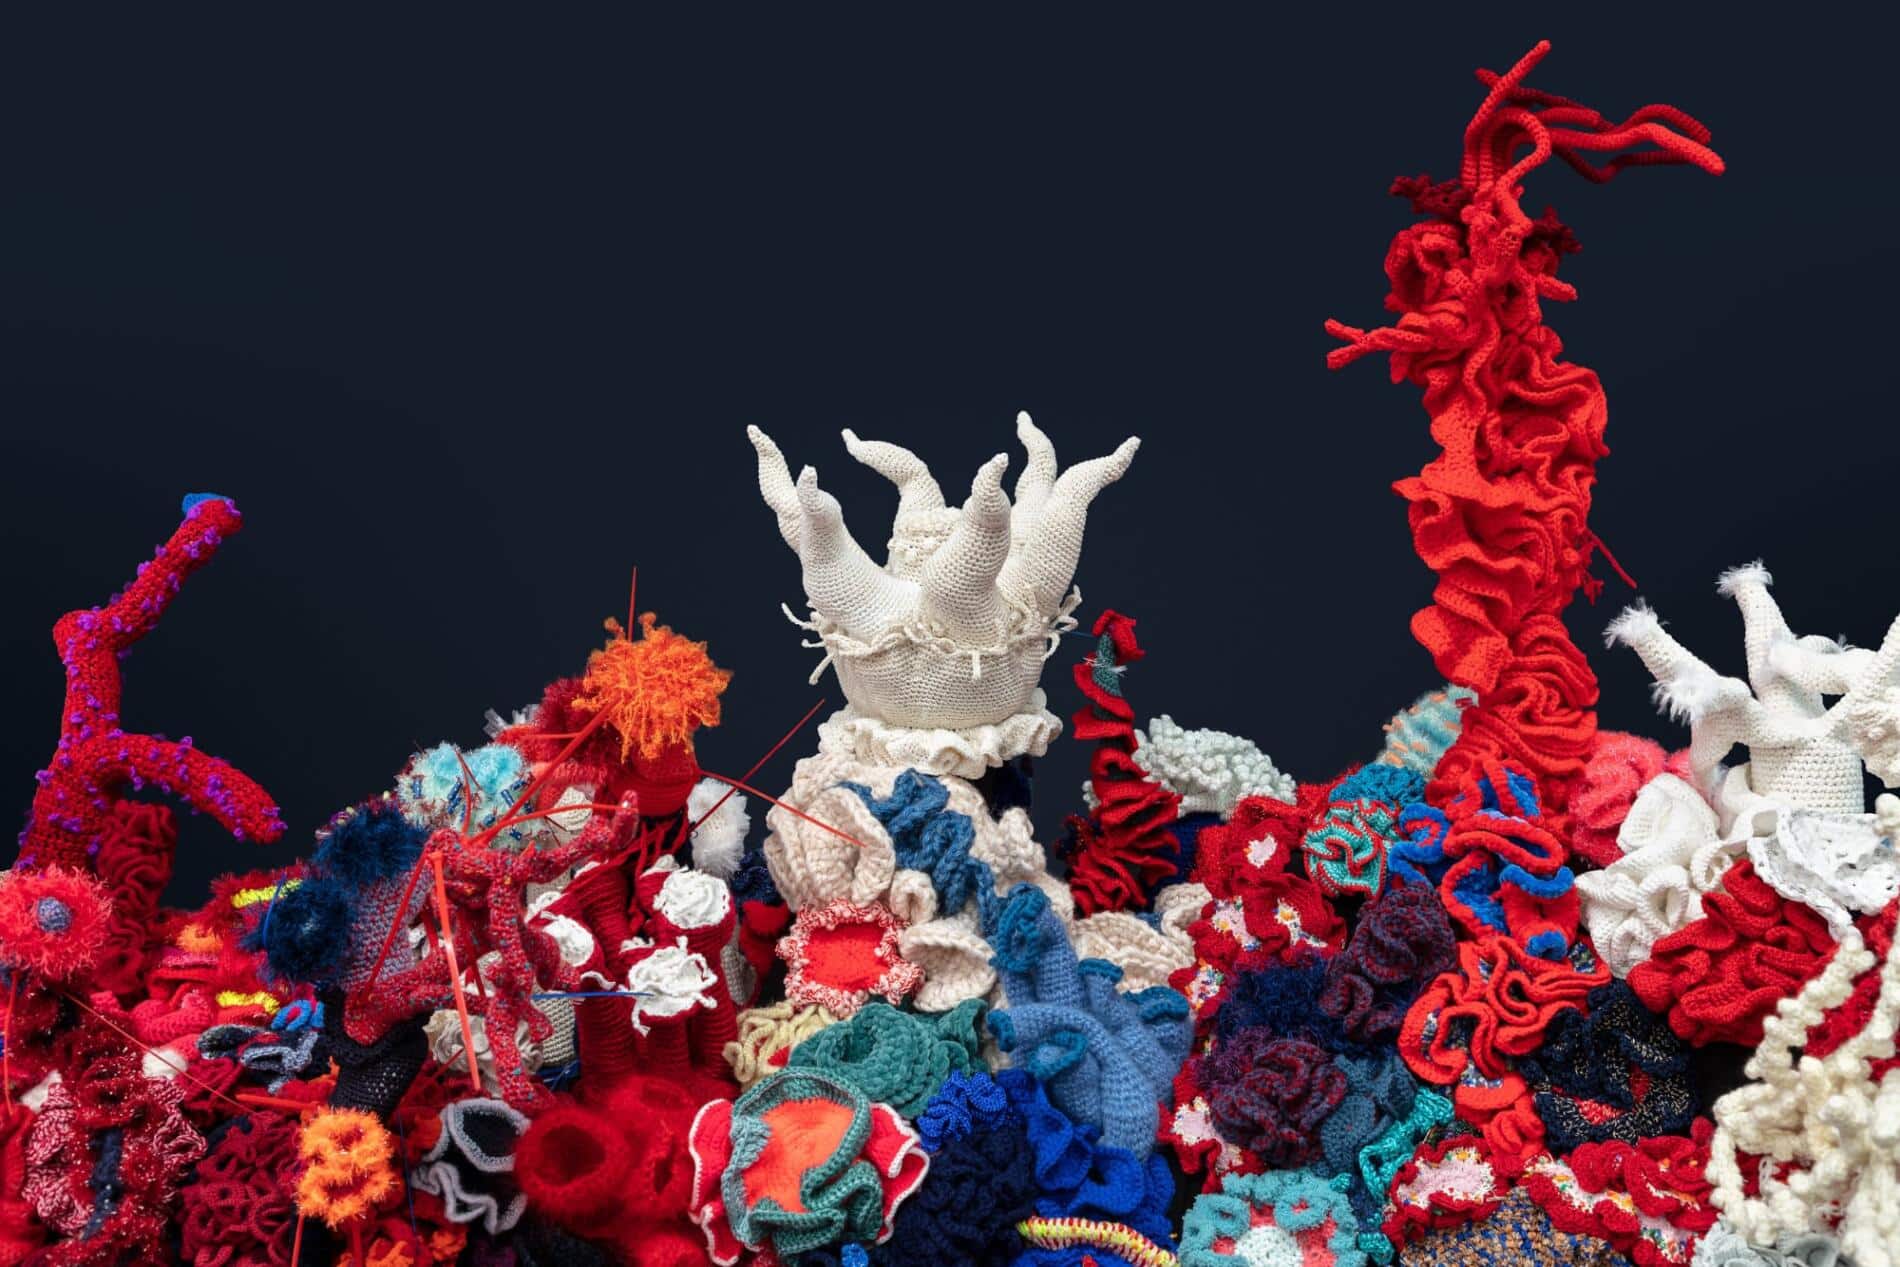 crochet coral reef escultura en ganchillo detalle red